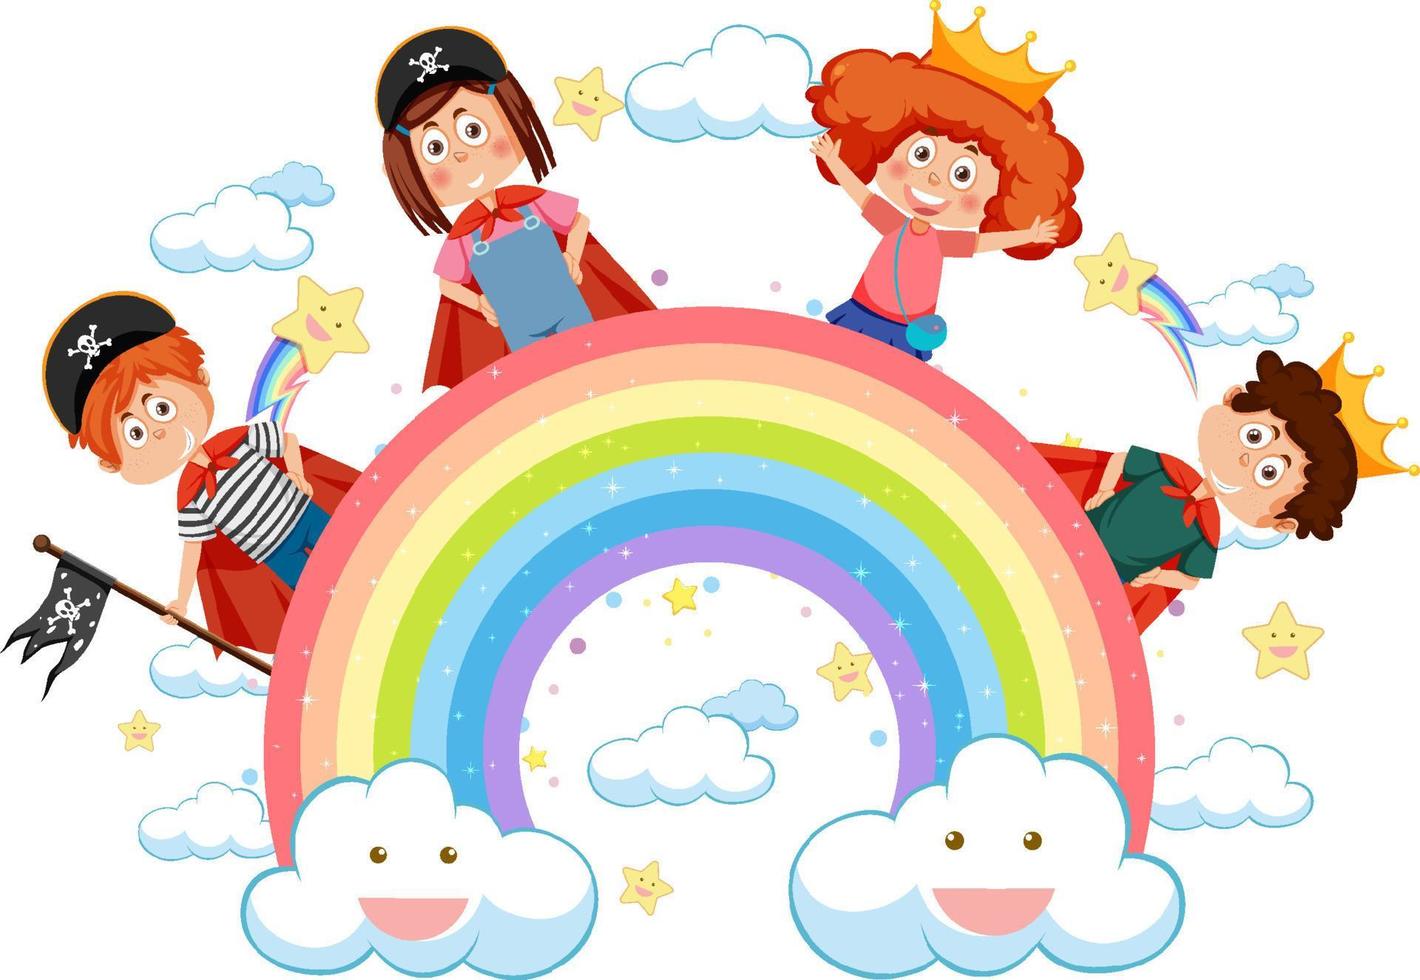 contento bambini con arcobaleno vettore